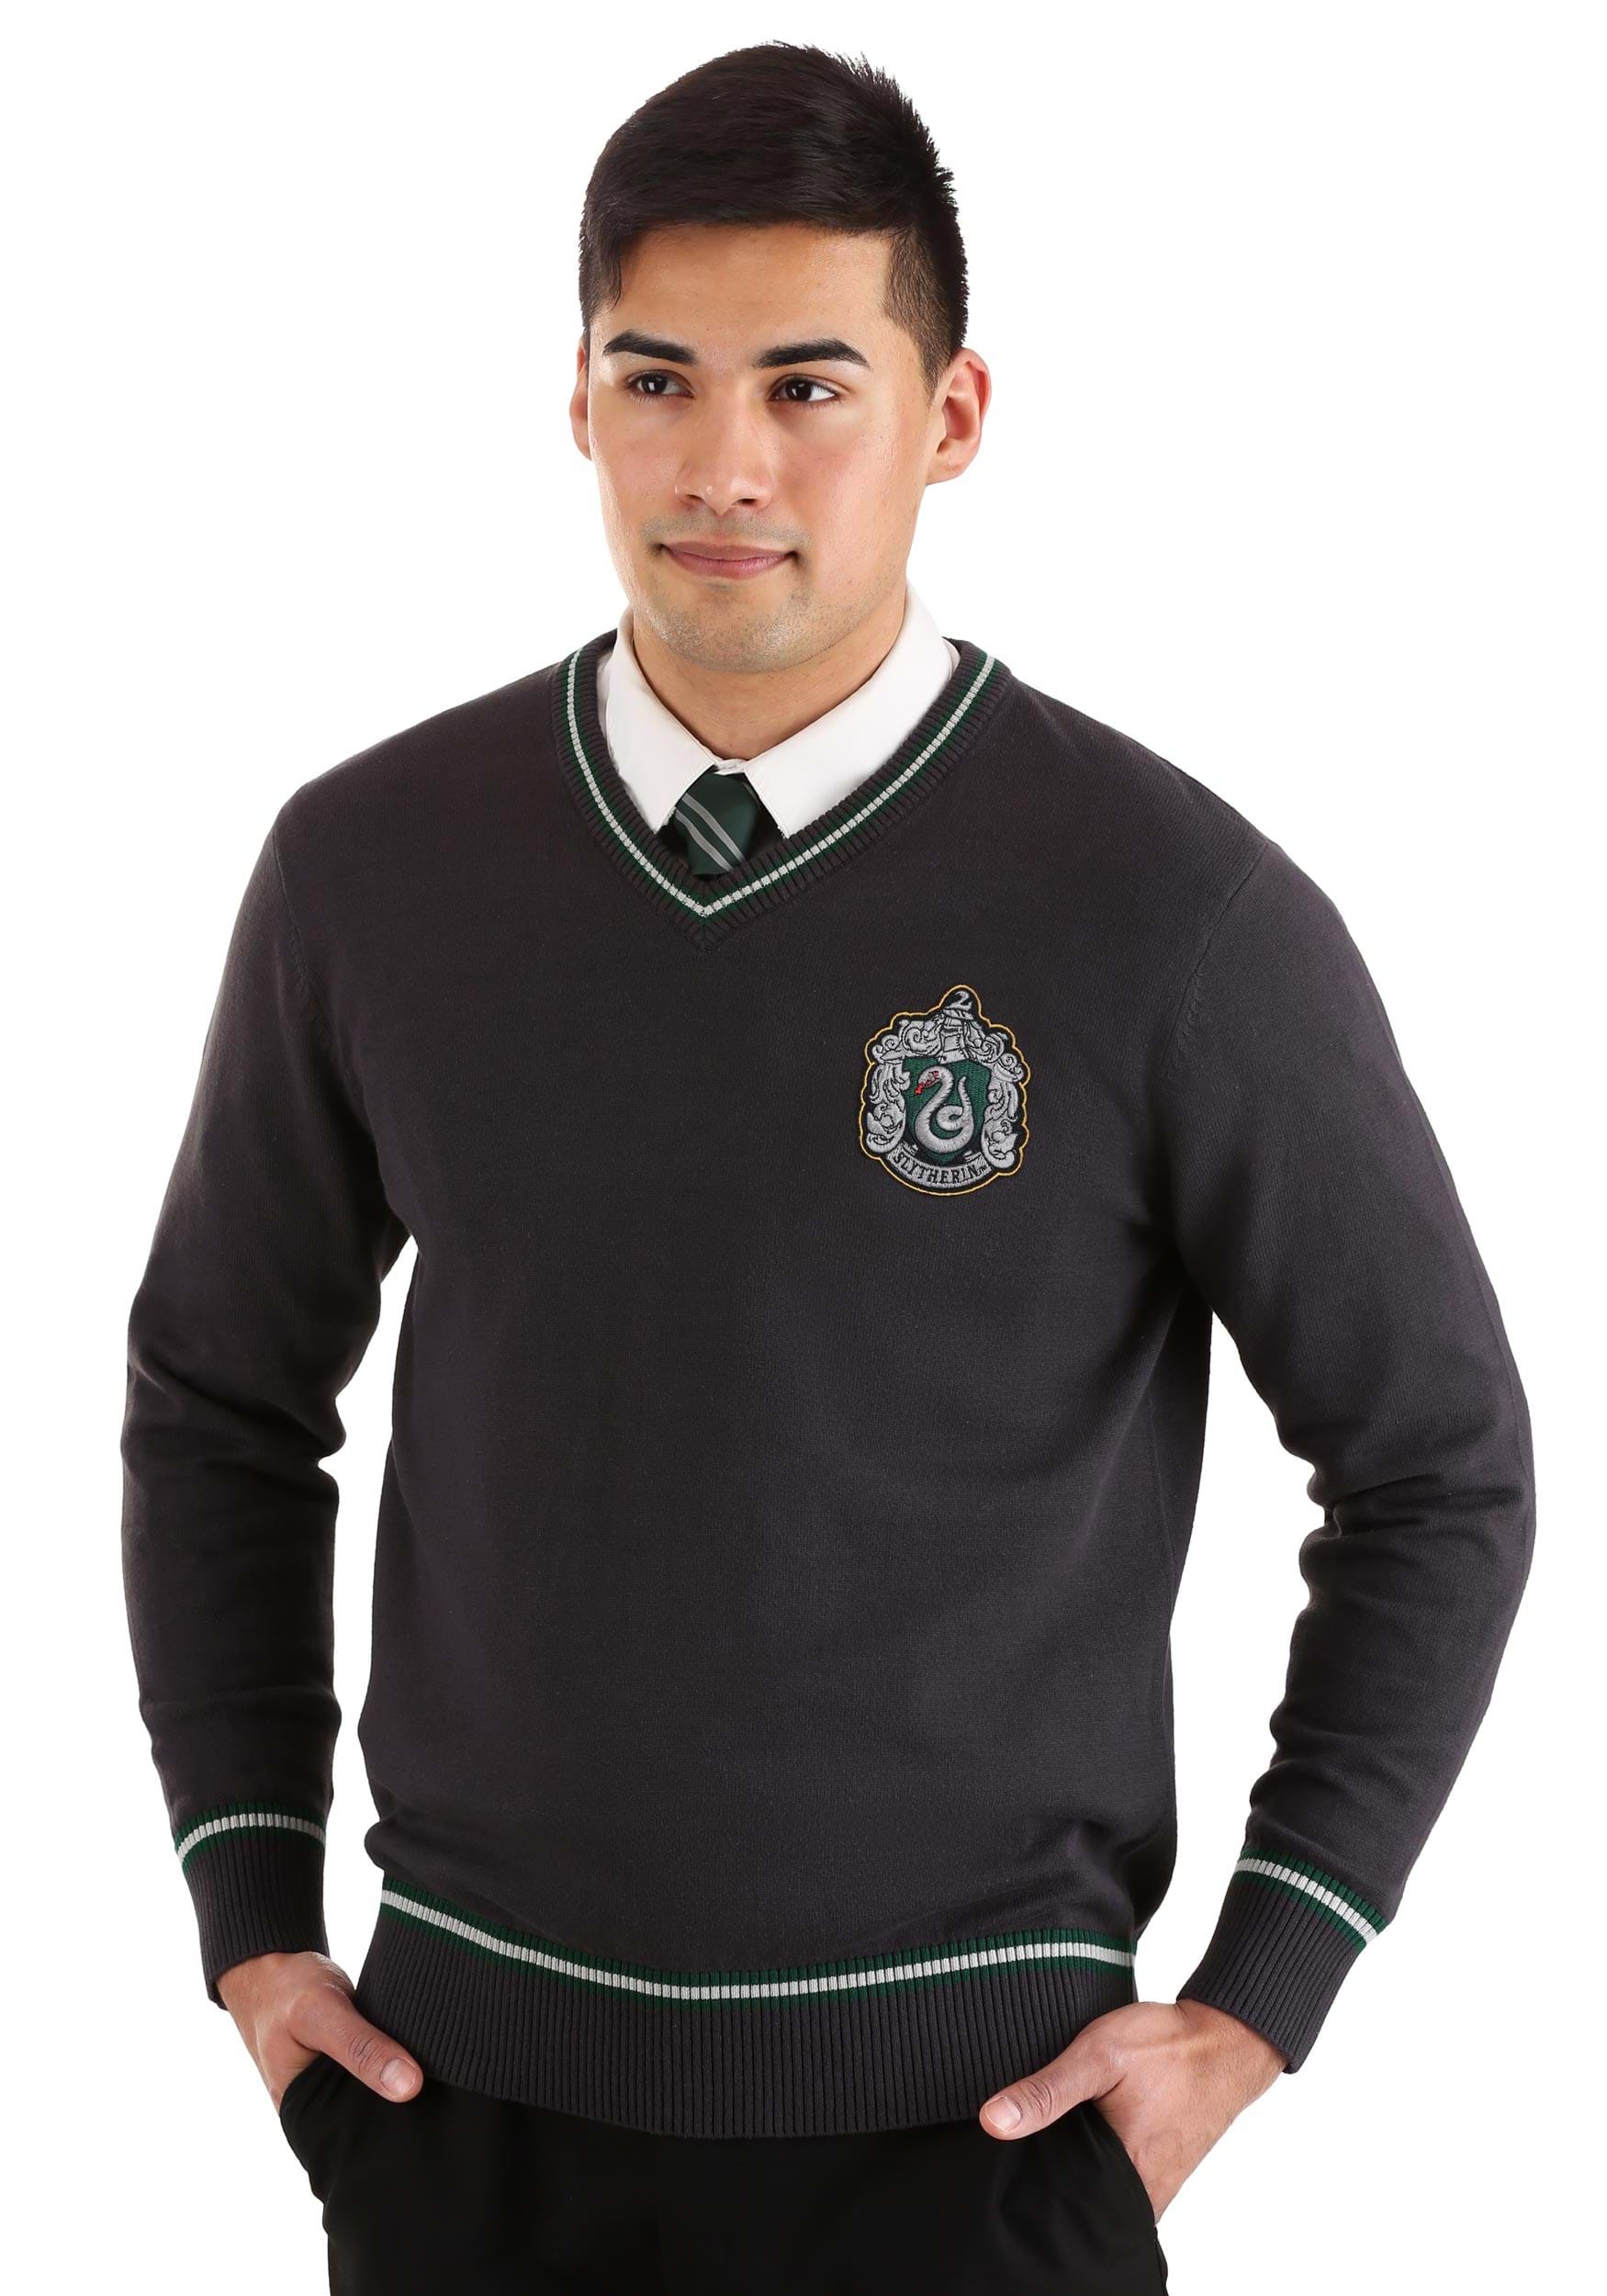 Barry vrije tijd Etna Adult Harry Potter Slytherin Uniform Sweater